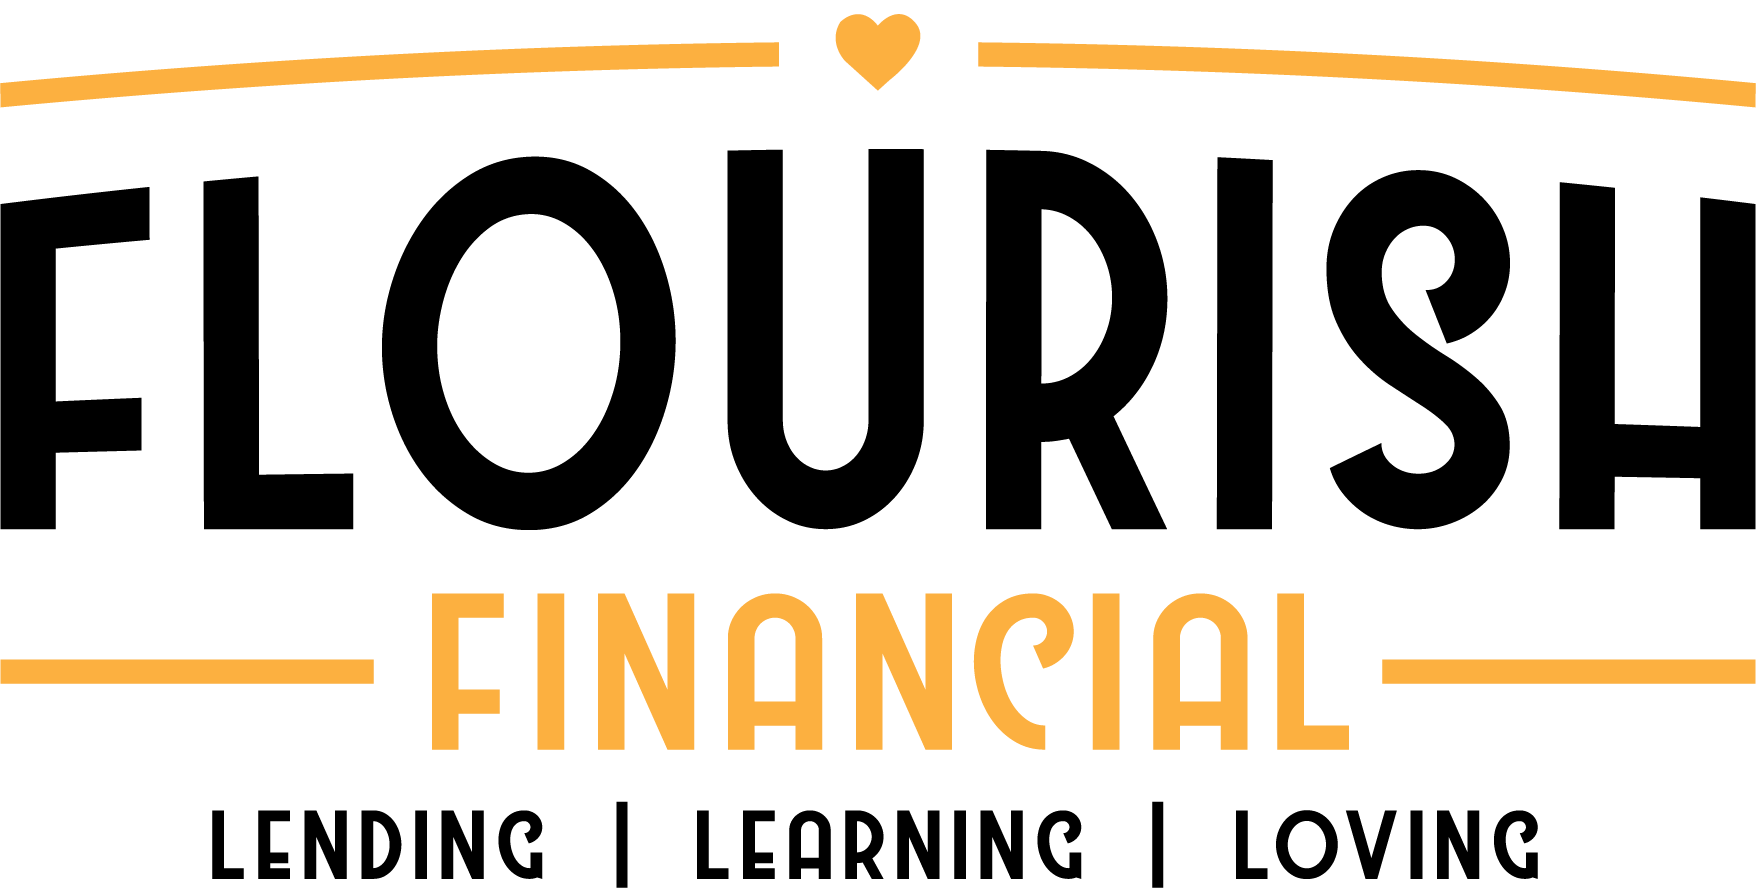 Logo Flourish financial - prêter, apprendre, aimer